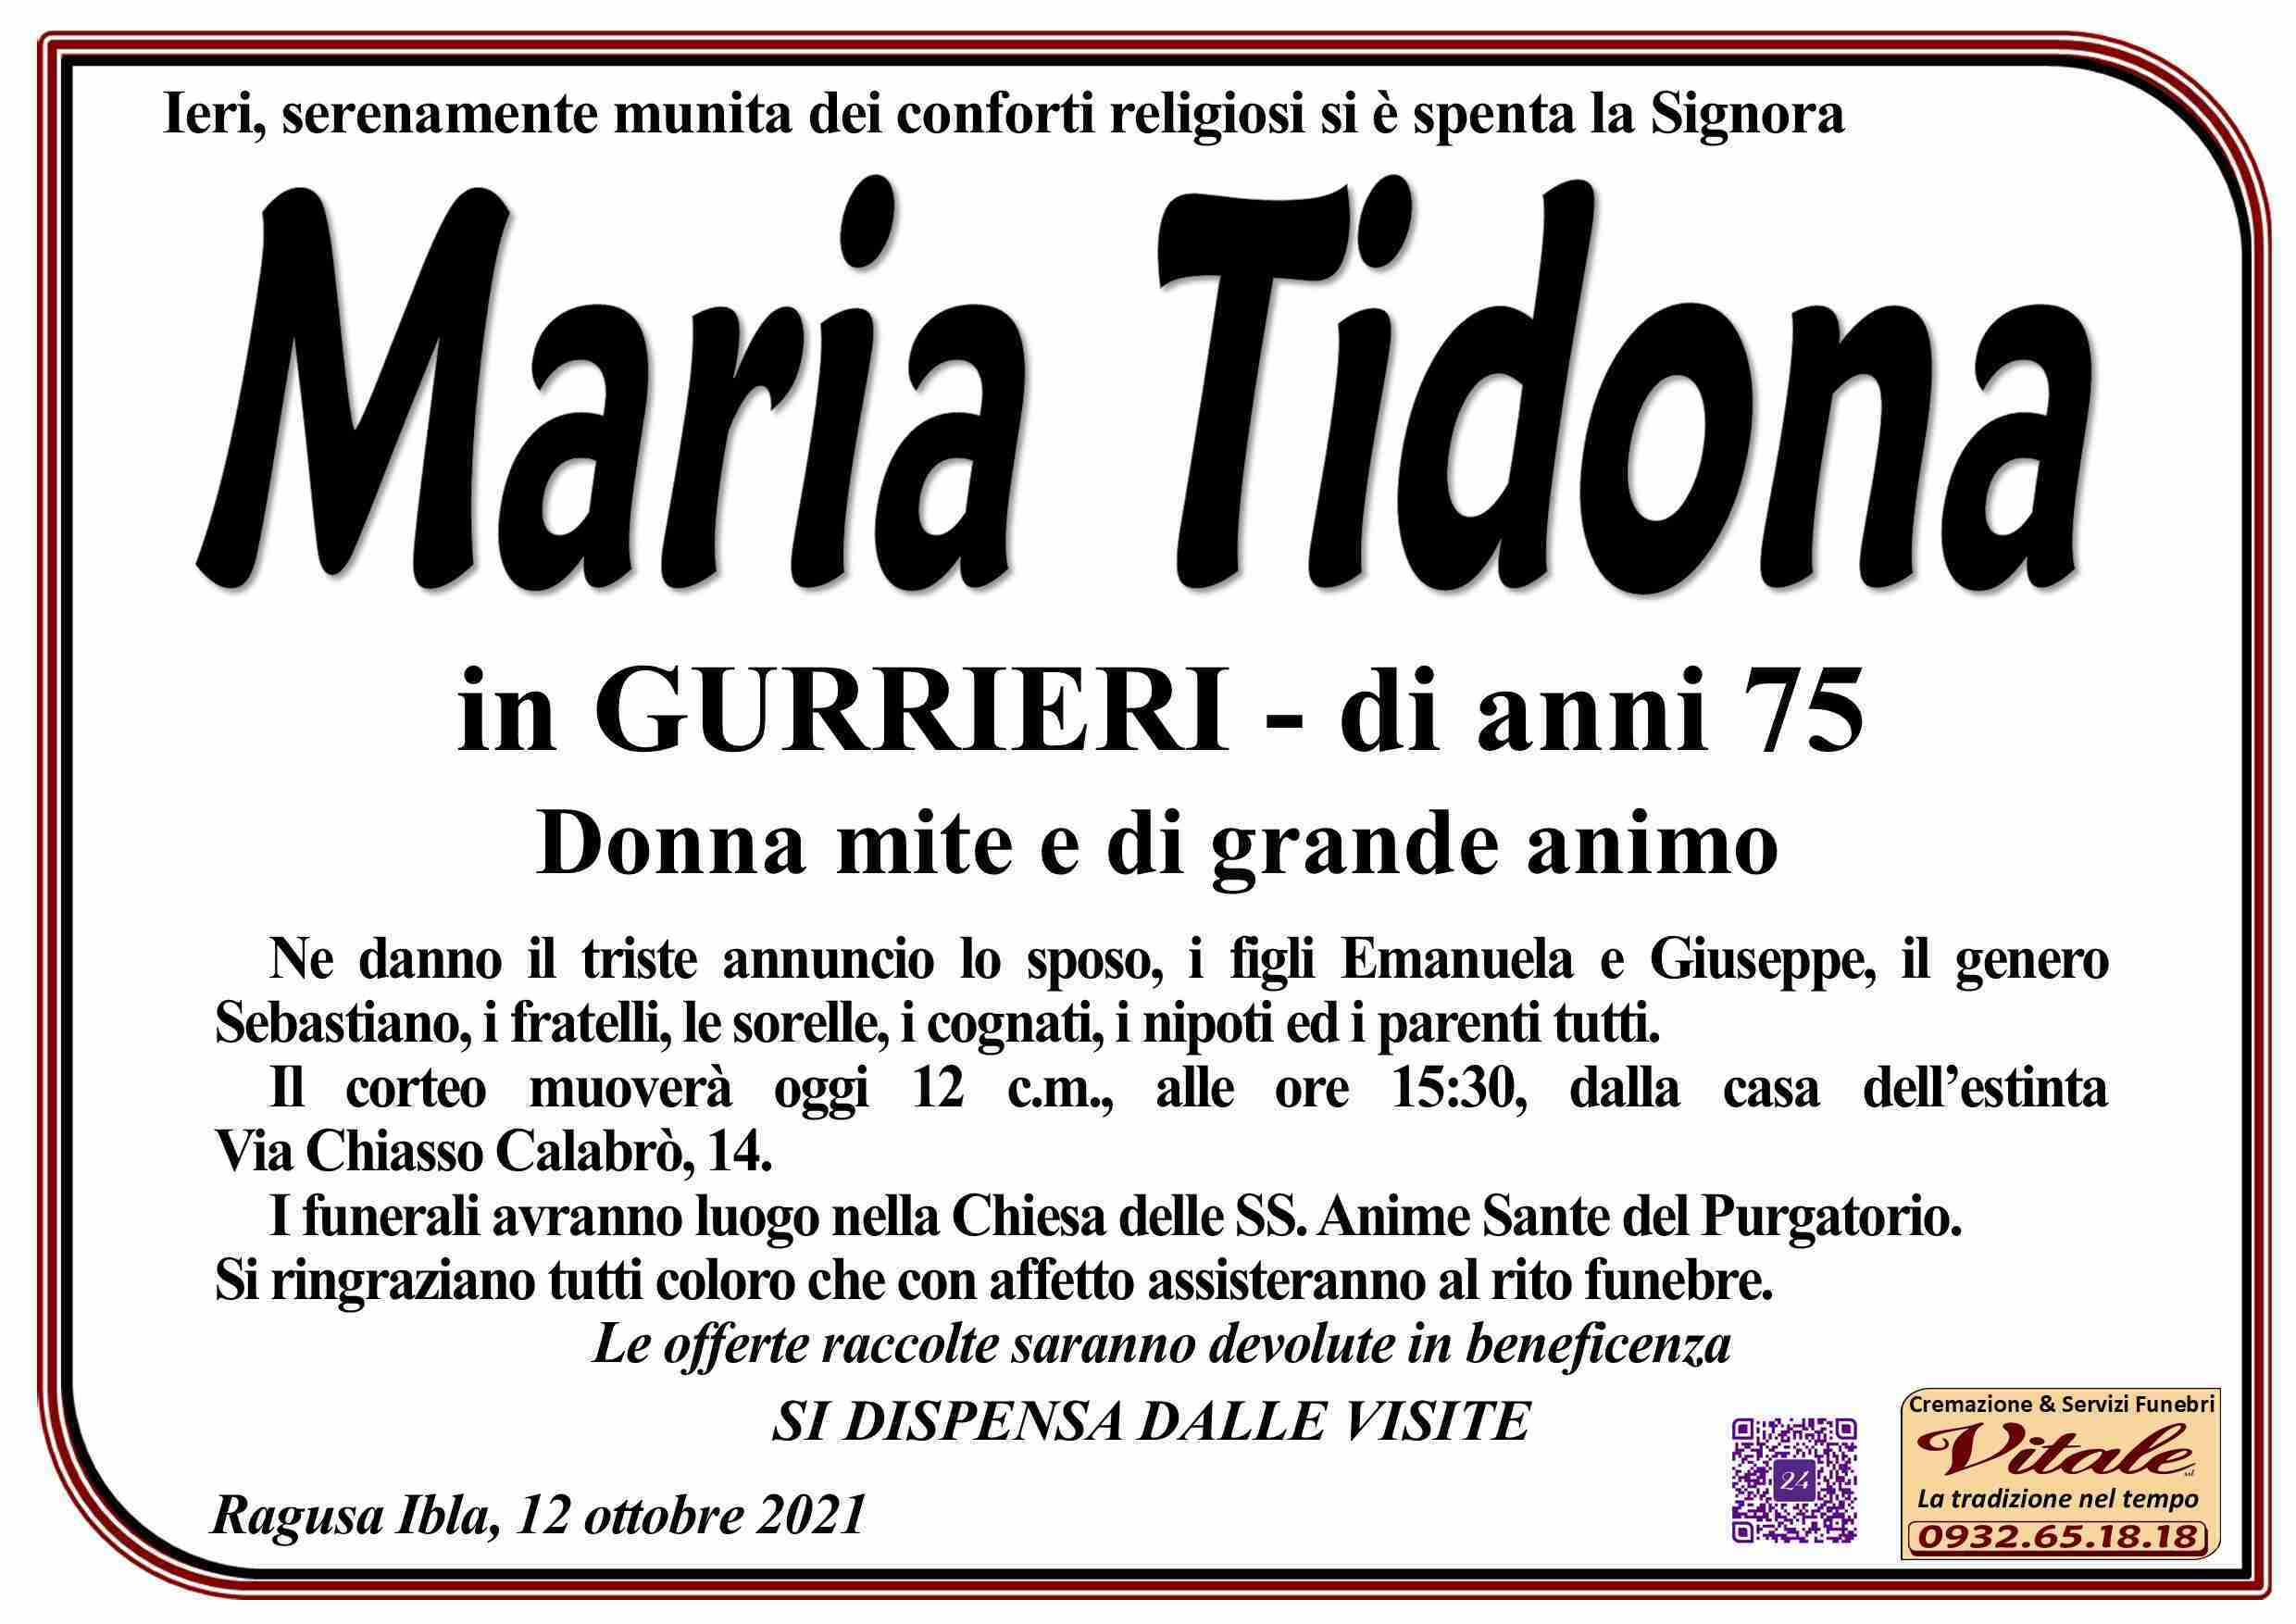 Maria Tidona